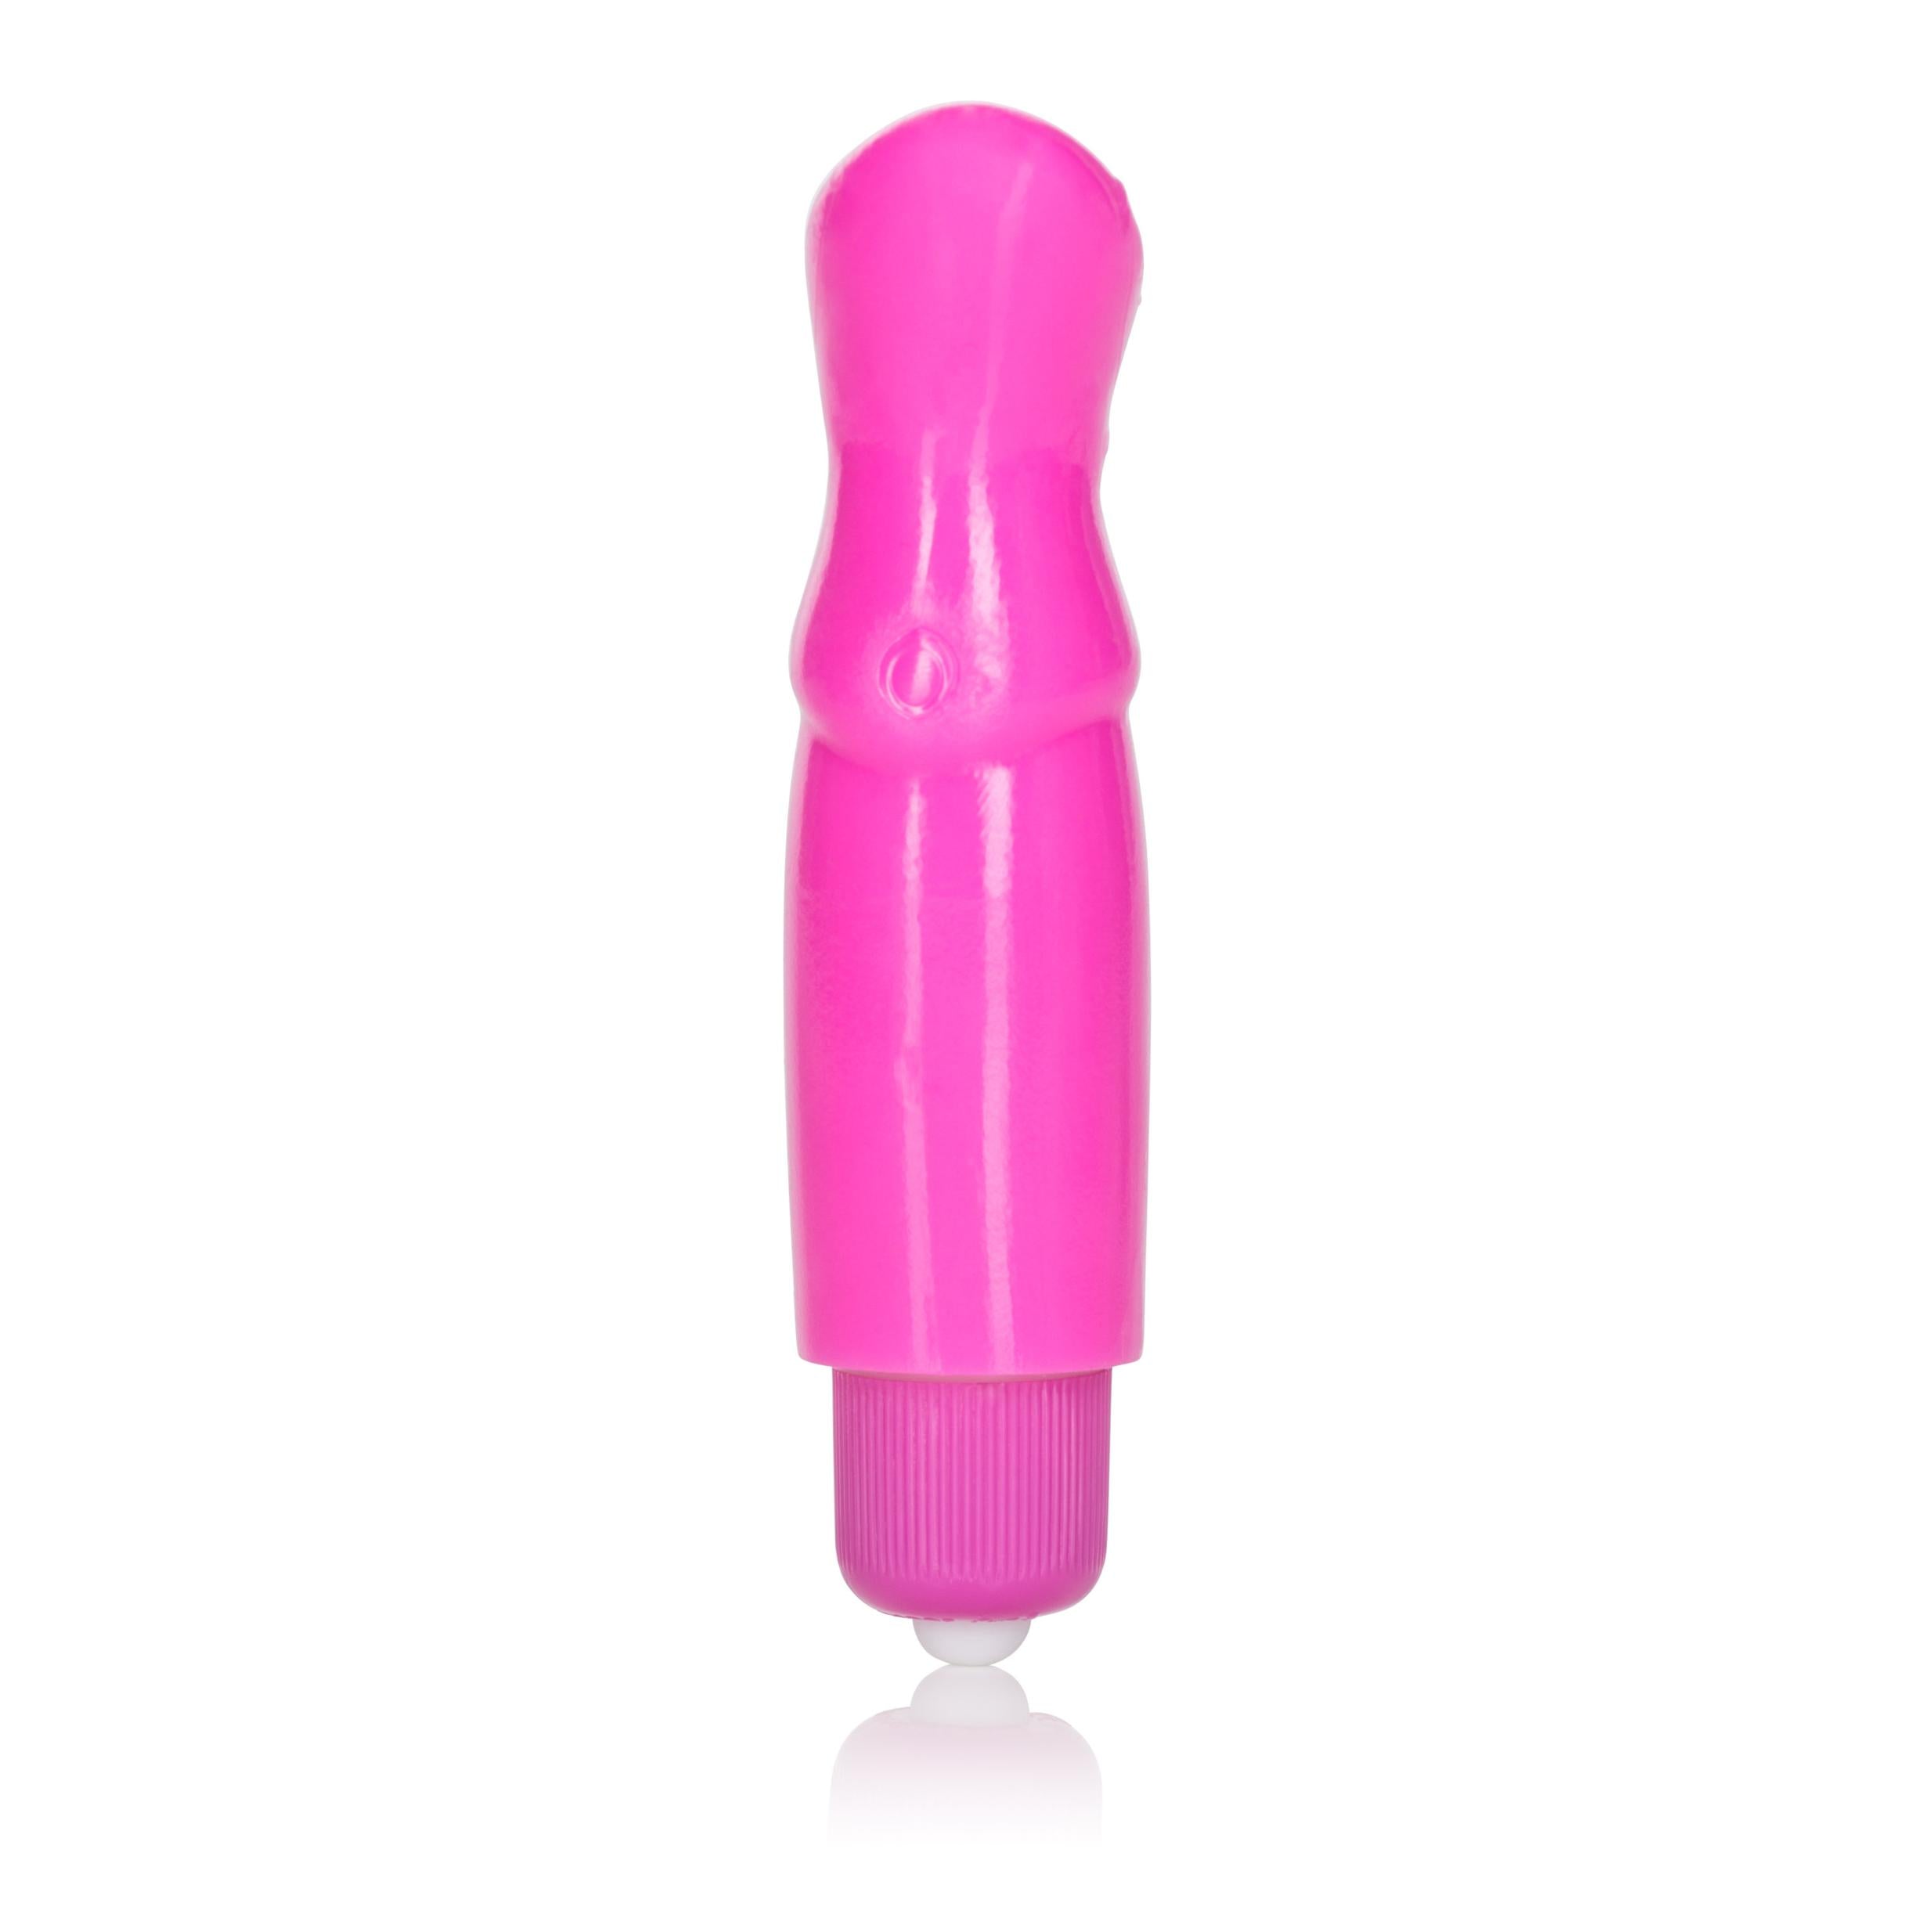 Ultimate Female Zinger Pink Vibrator